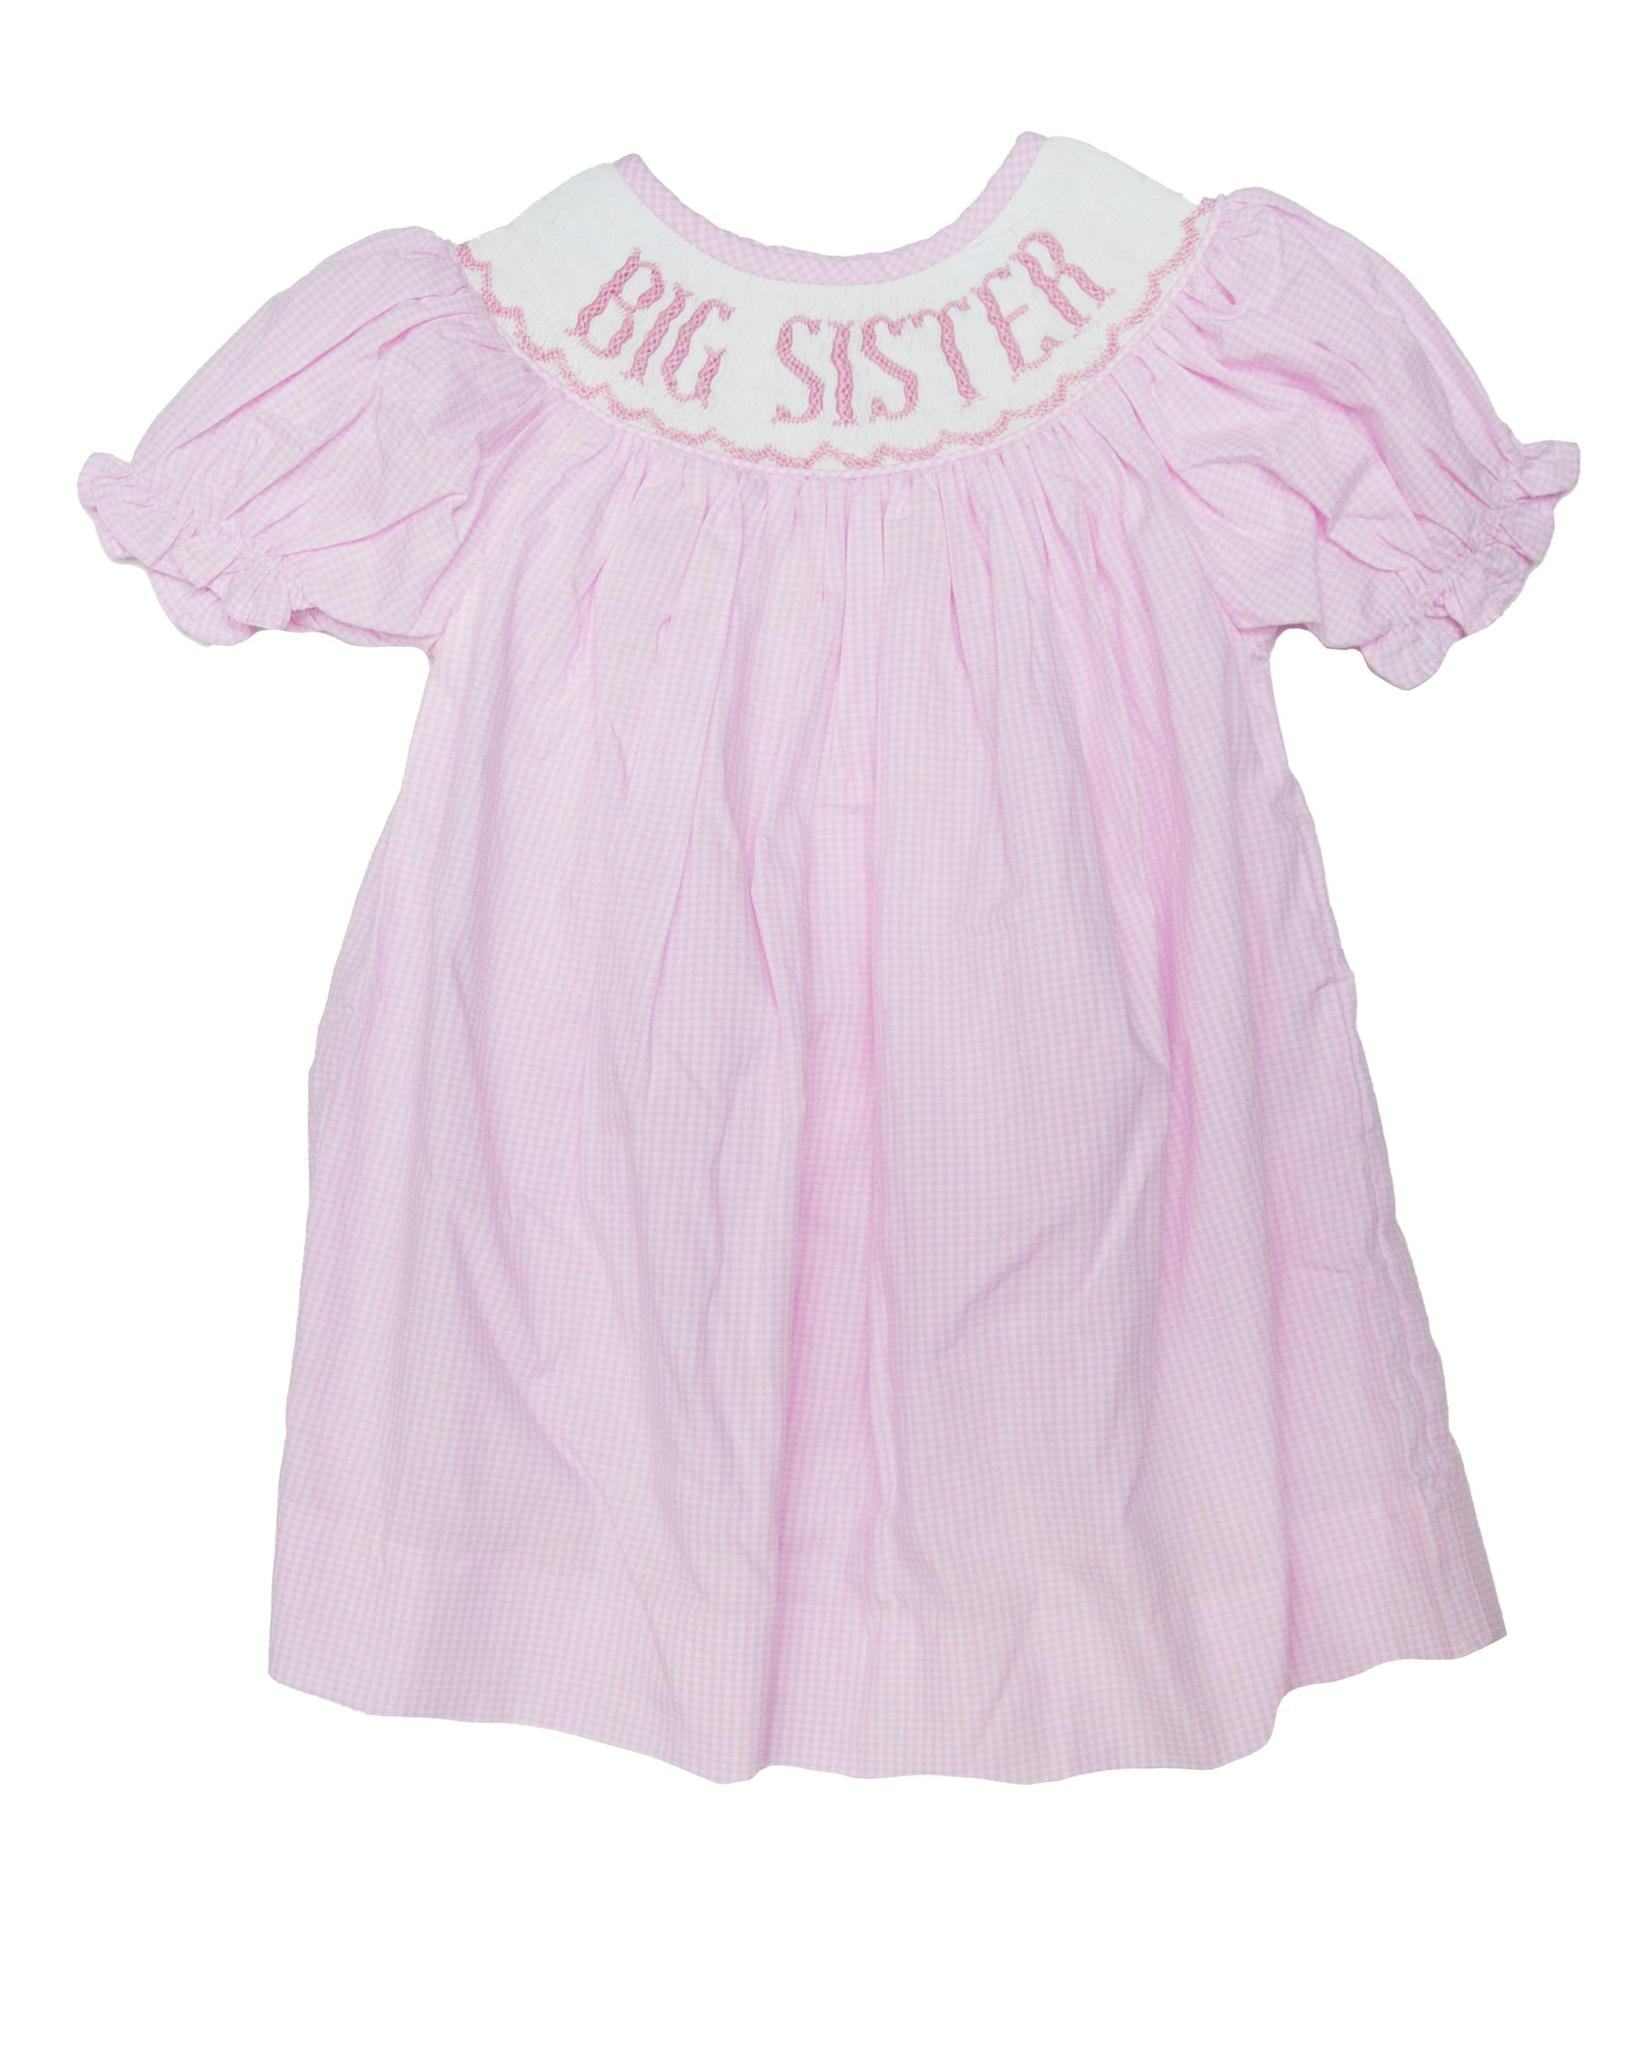 Big Sister - Pink Gingham Emmie Dress